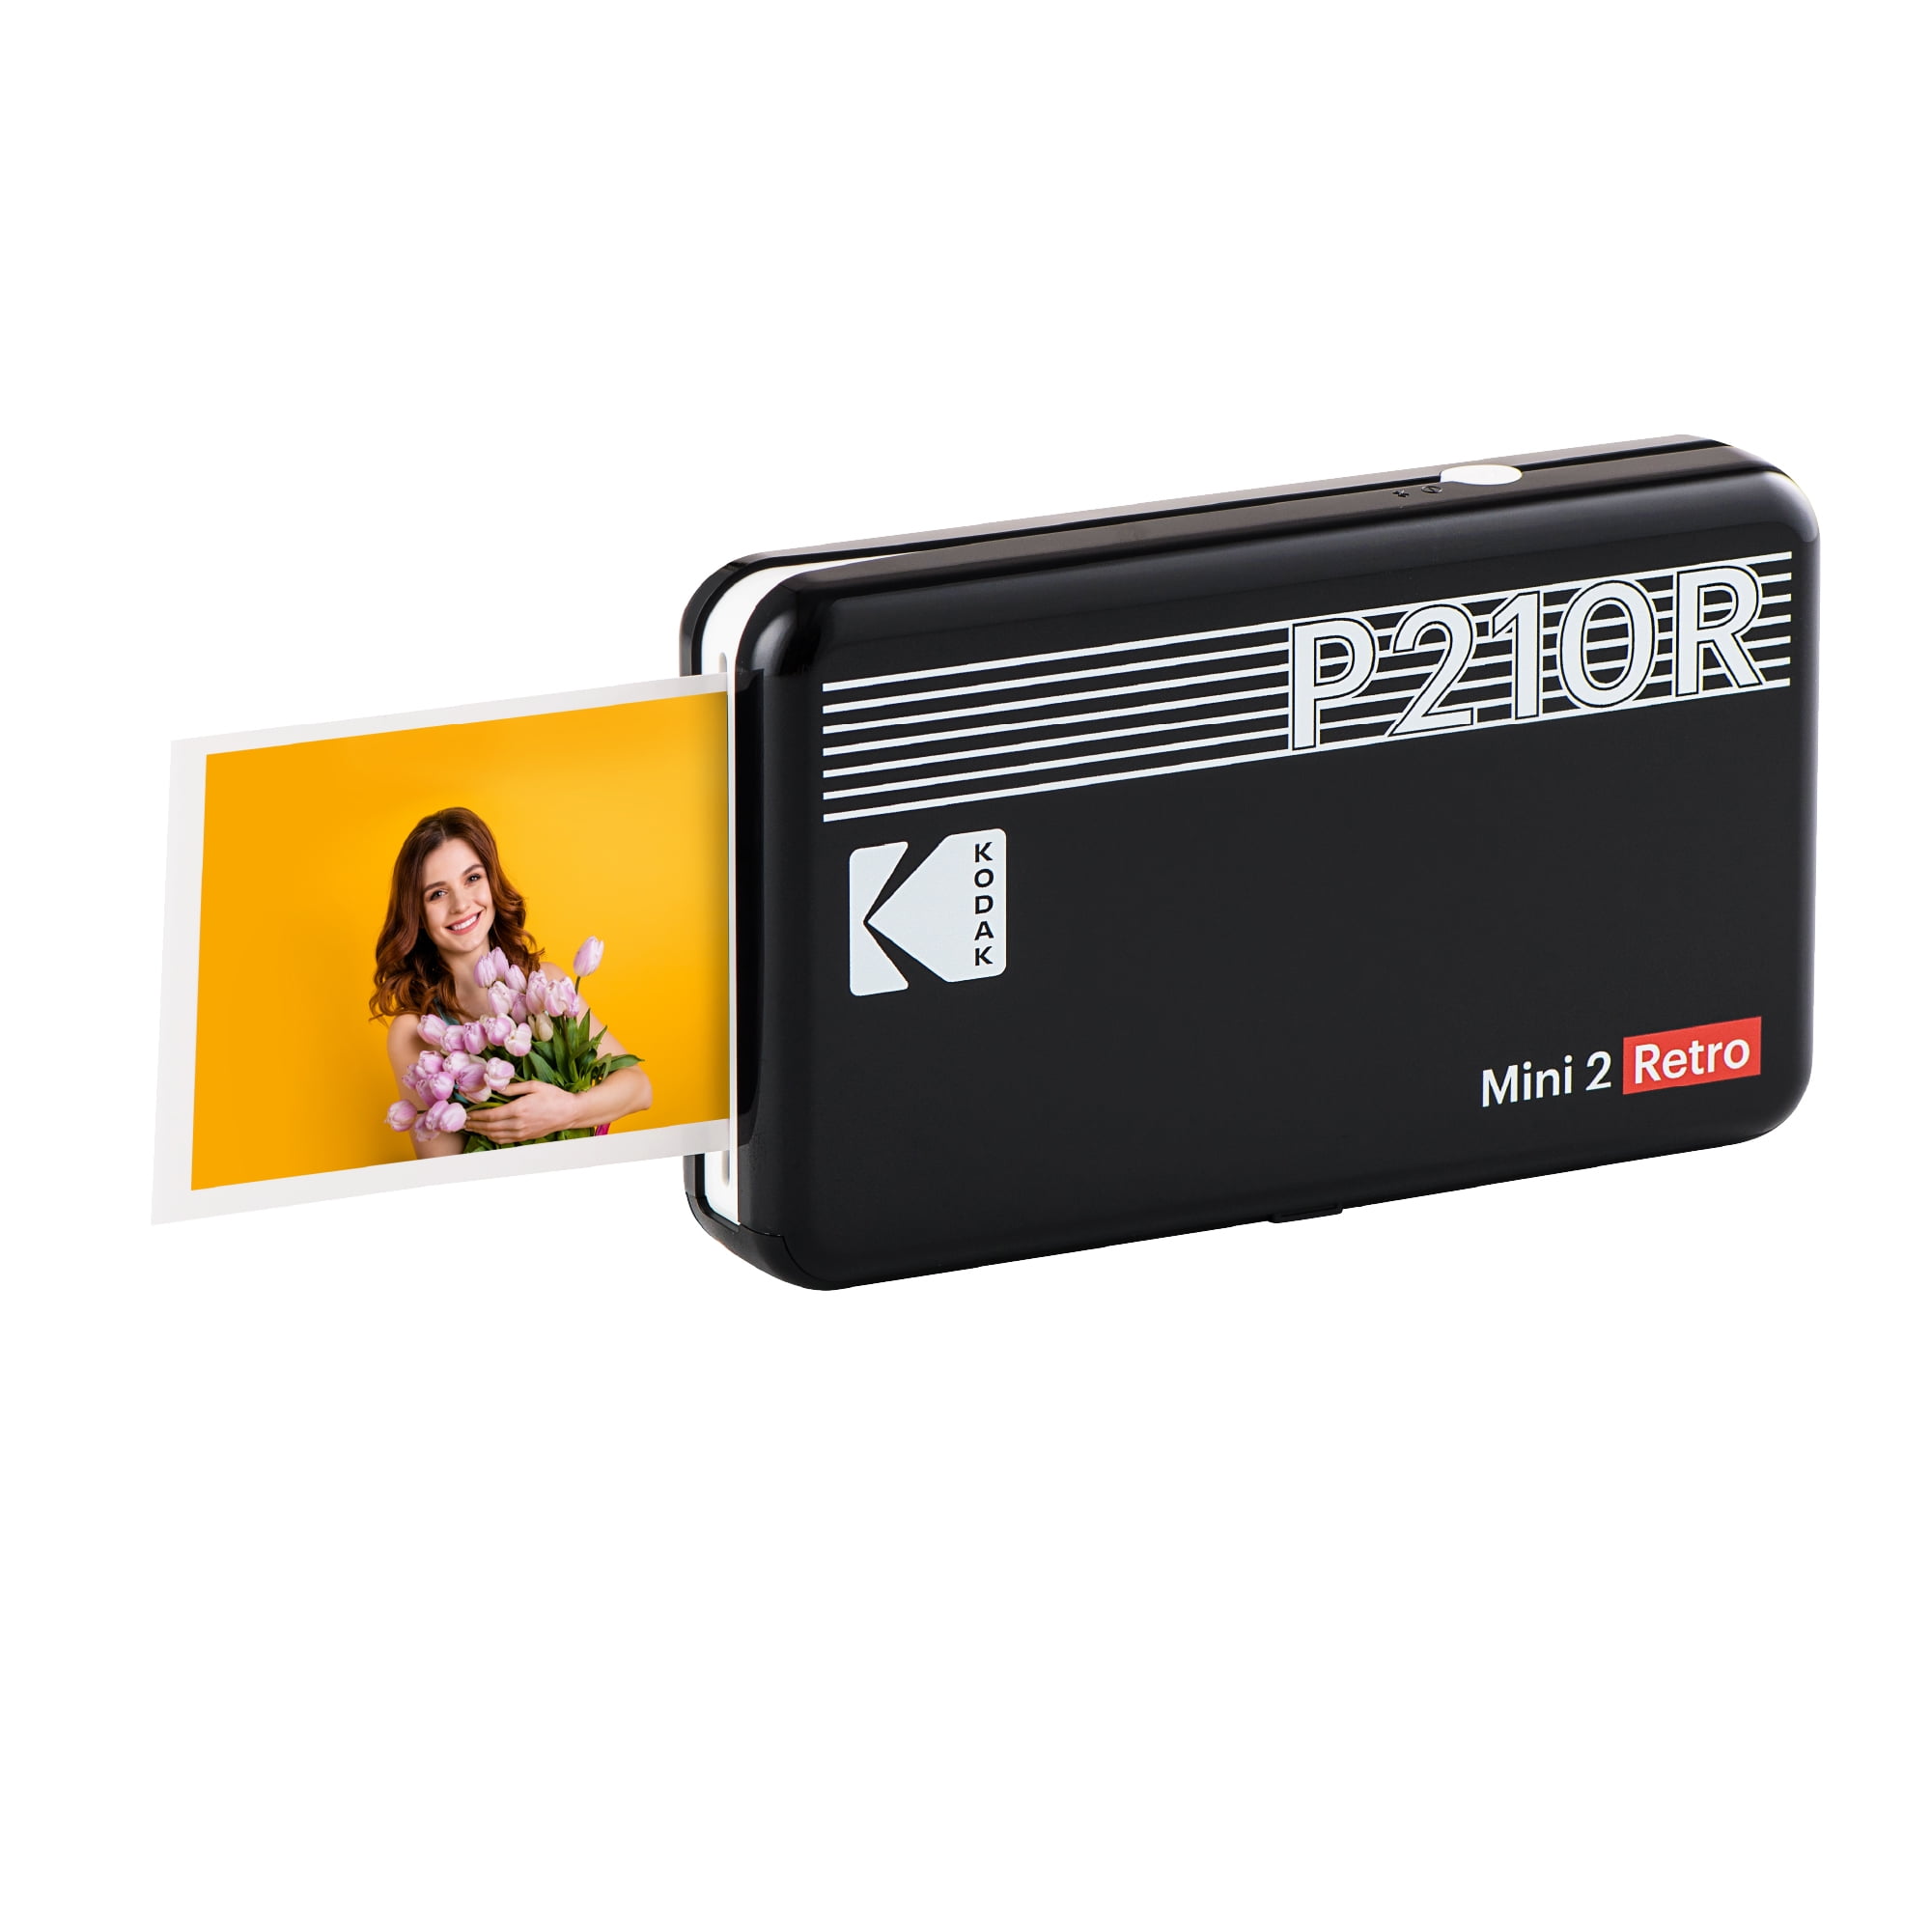 Absorbere rynker Generalife KODAK Mini 2 Retro 4PASS Portable Photo Printer (2.1x3.4 inches) + 8  Sheets, Black - Walmart.com